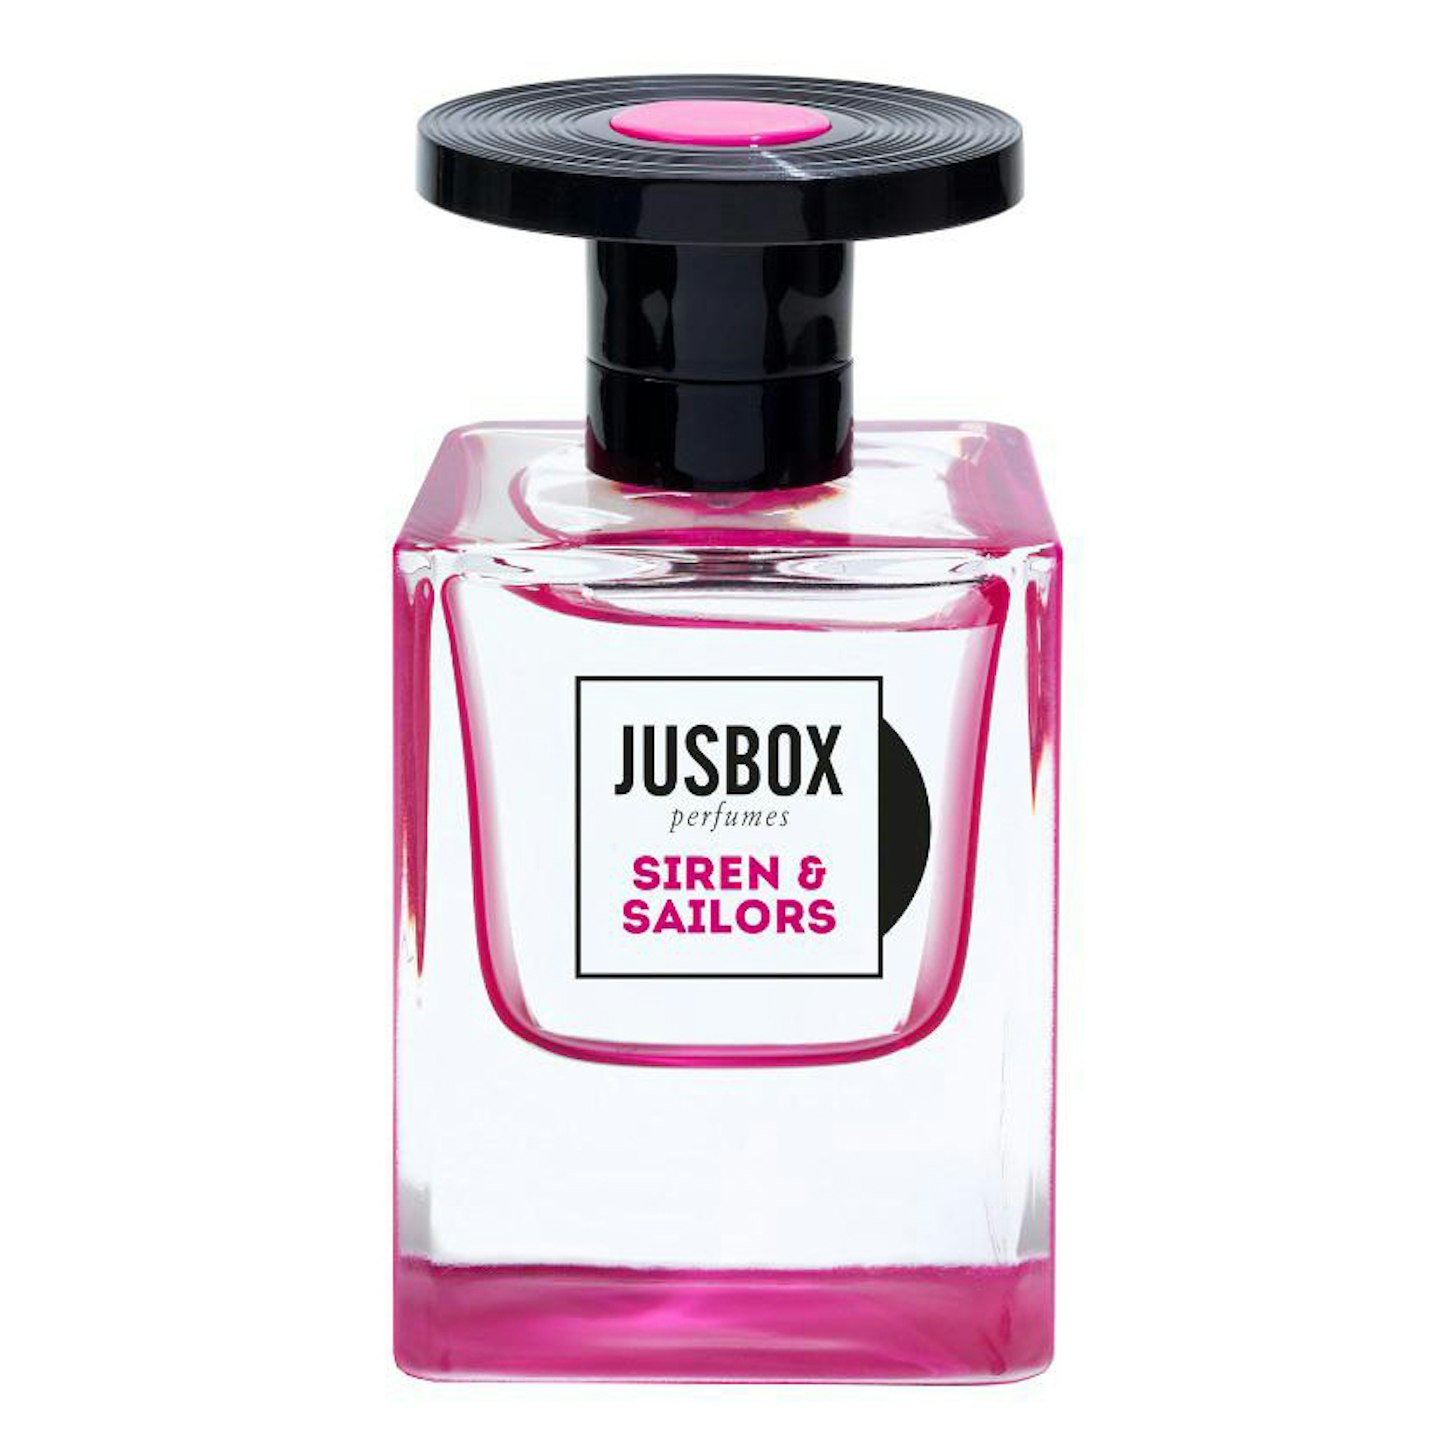 Jusbox - Sirens & Sailors